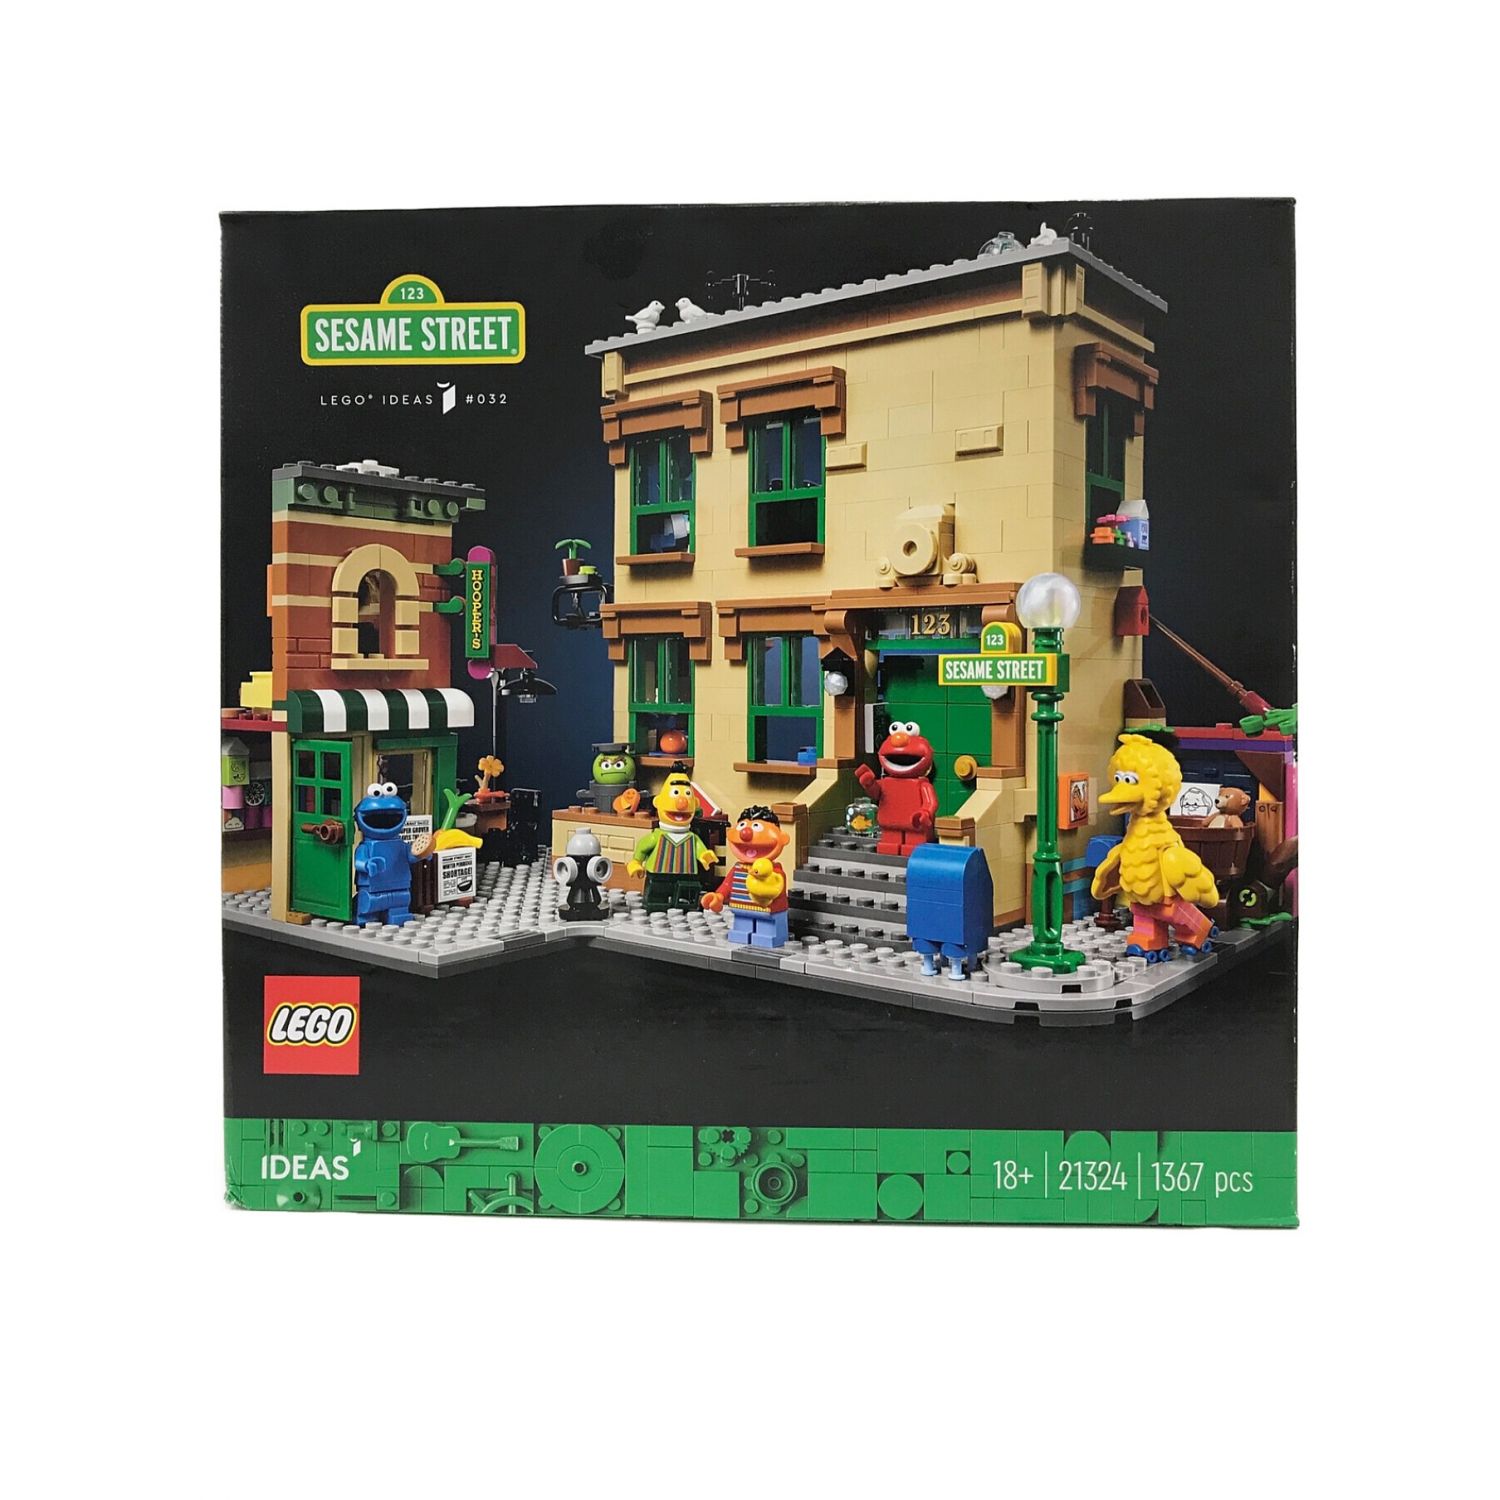 LEGO (レゴ) レゴブロック アイデア セサミストリート 123番地